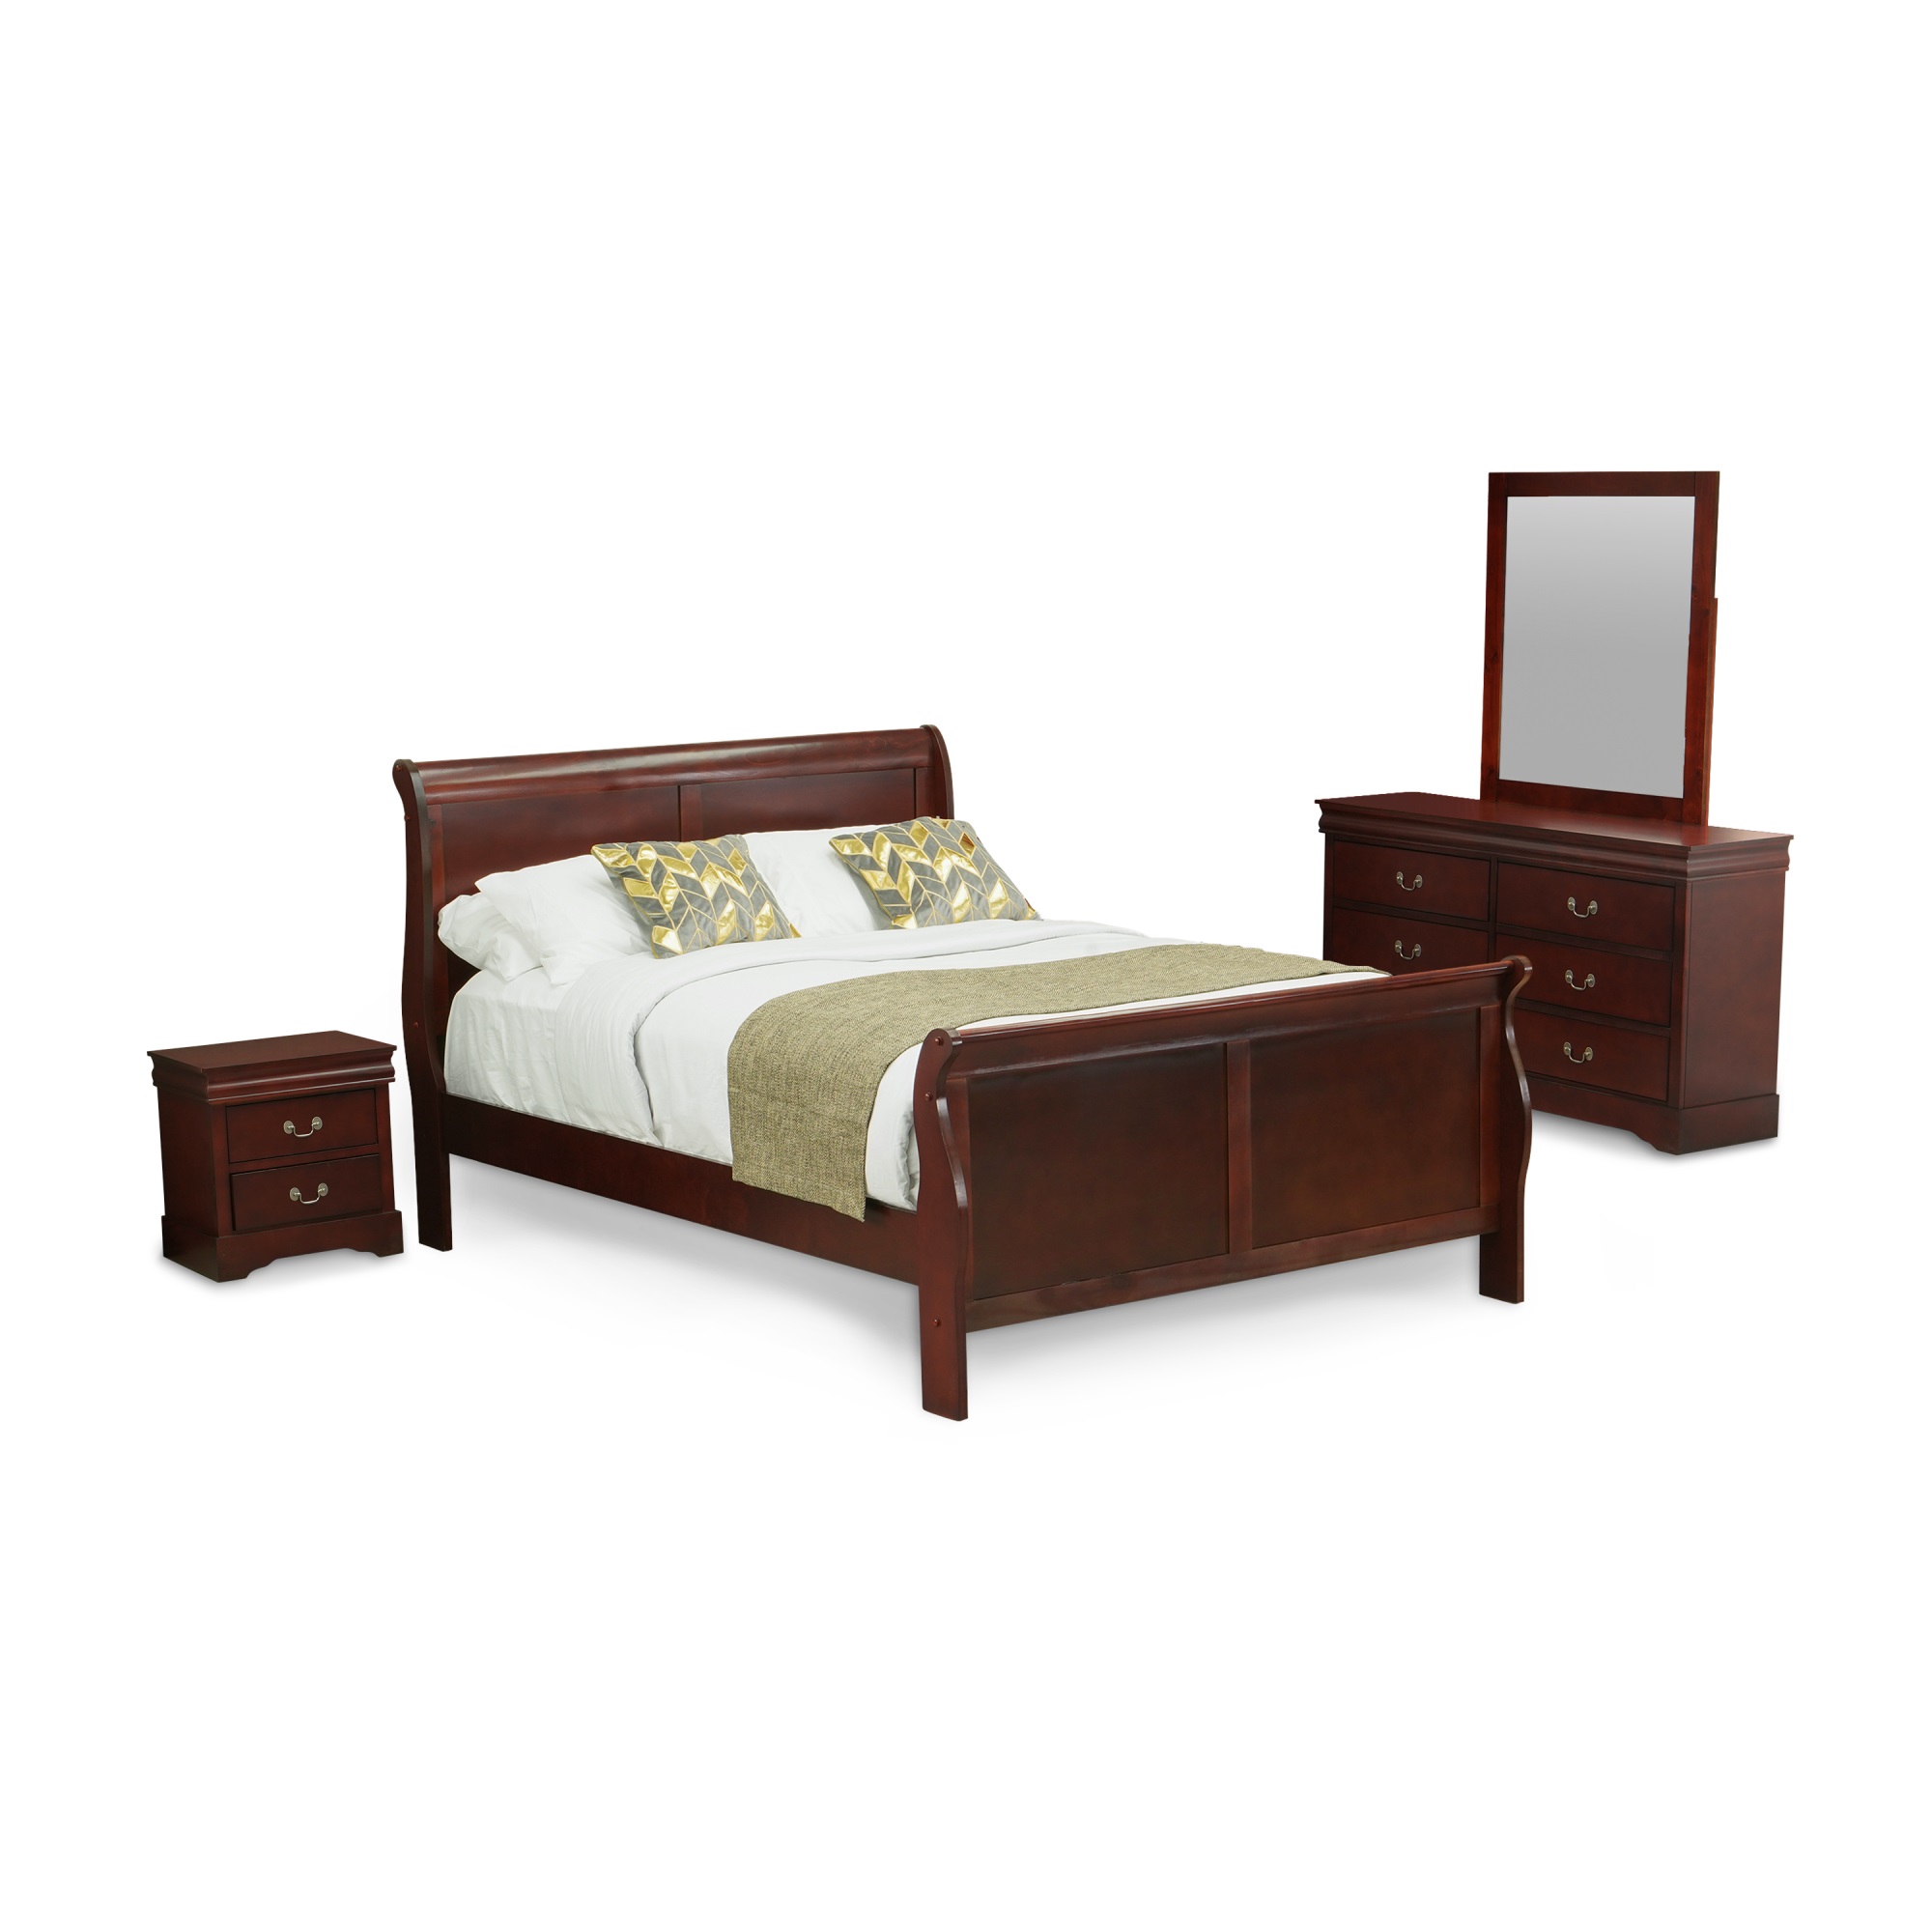 East West Furniture Louis Philippe 4 Piece Queen Size Bedroom Set in Phillip Walnut Finish with Queen Bed,Nightstand ,Dresser,